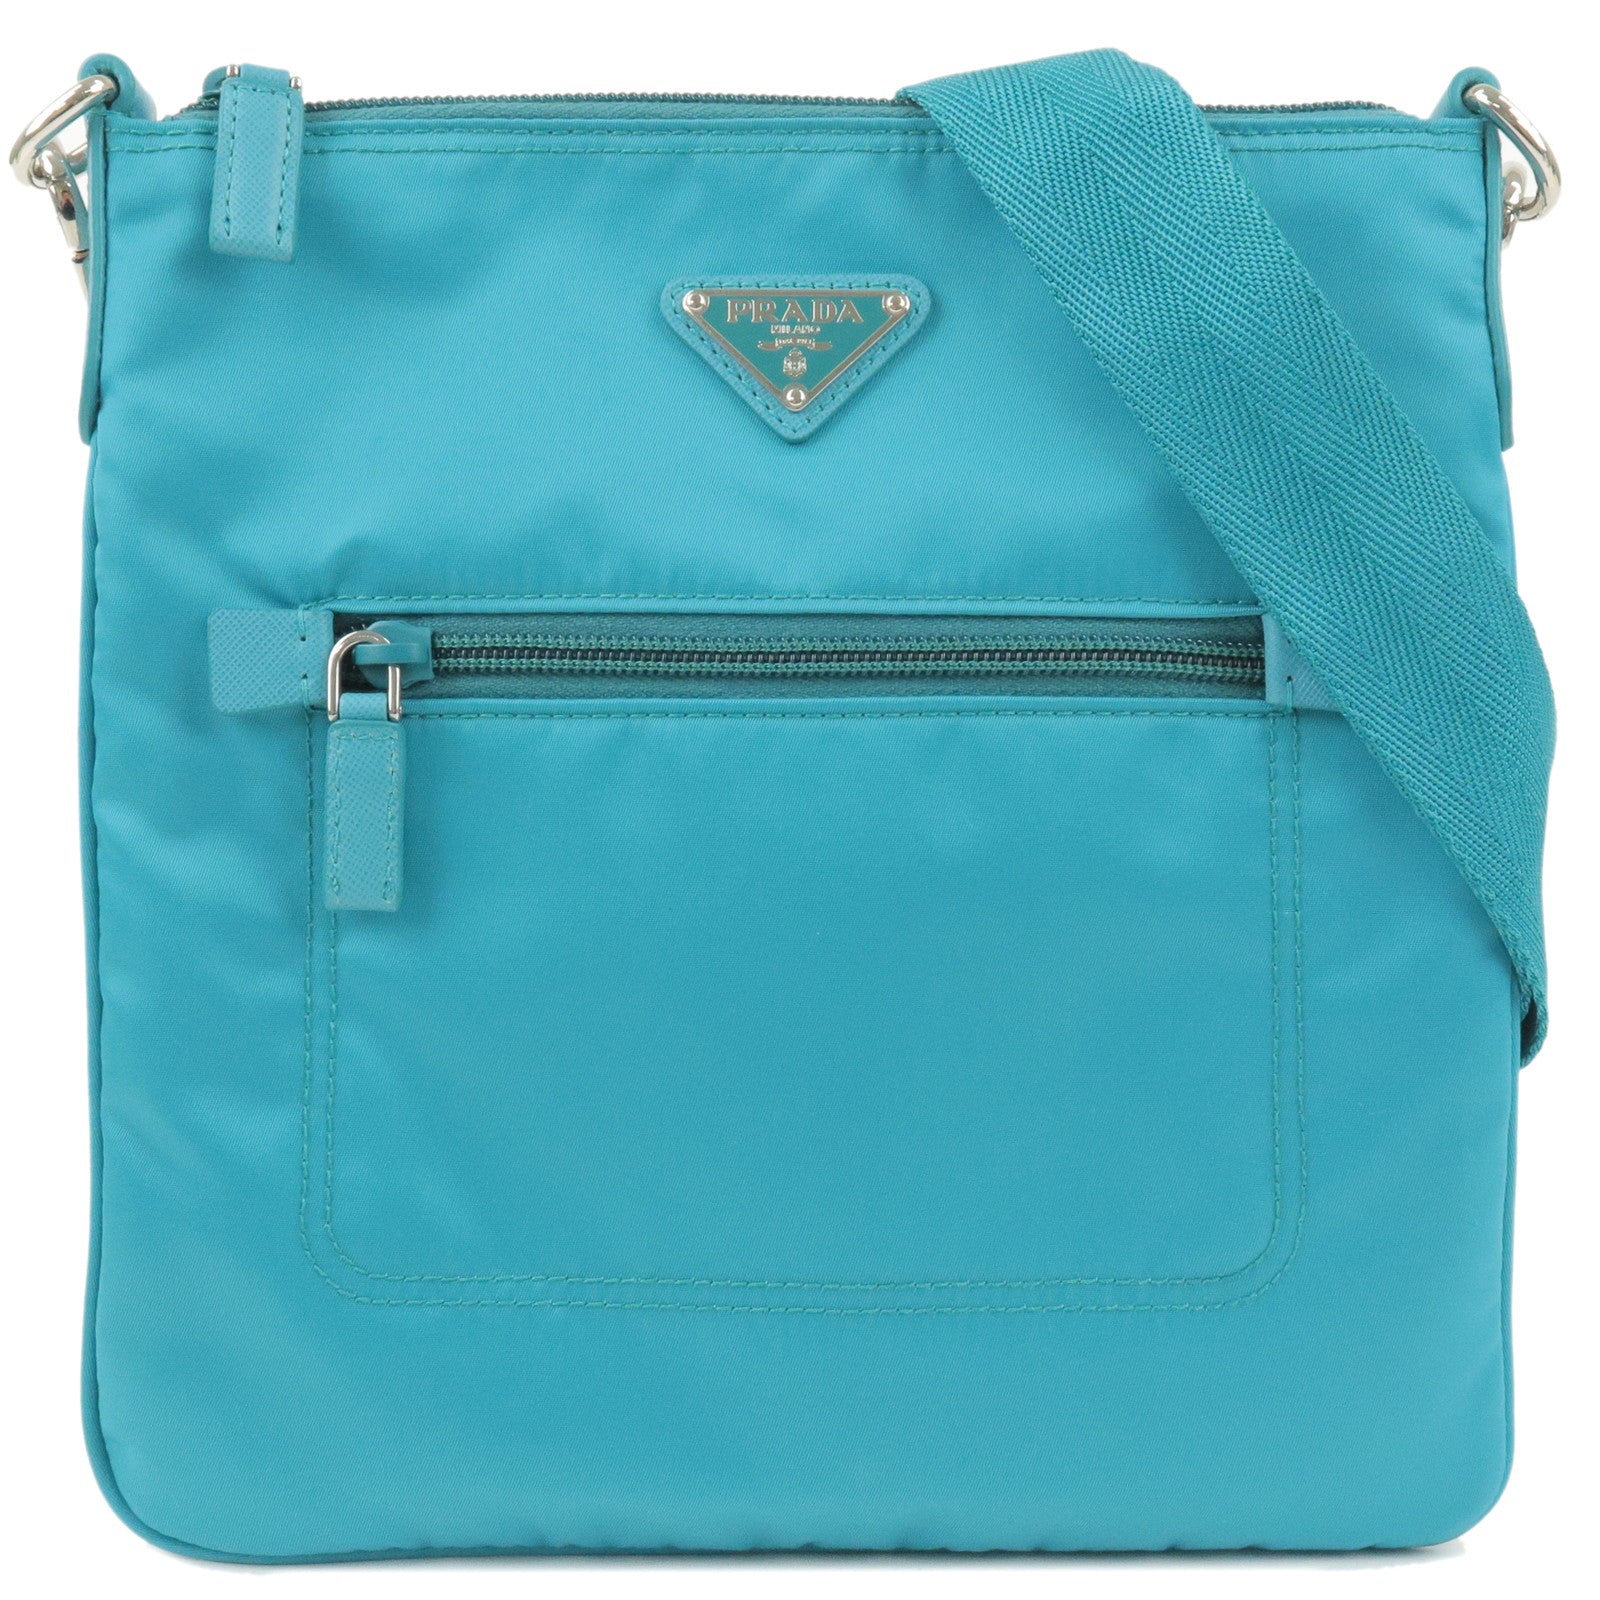 PRADA-Logo-Nylon-Leather-Shoulder-Bag-Turquoise-Blue-BT0716